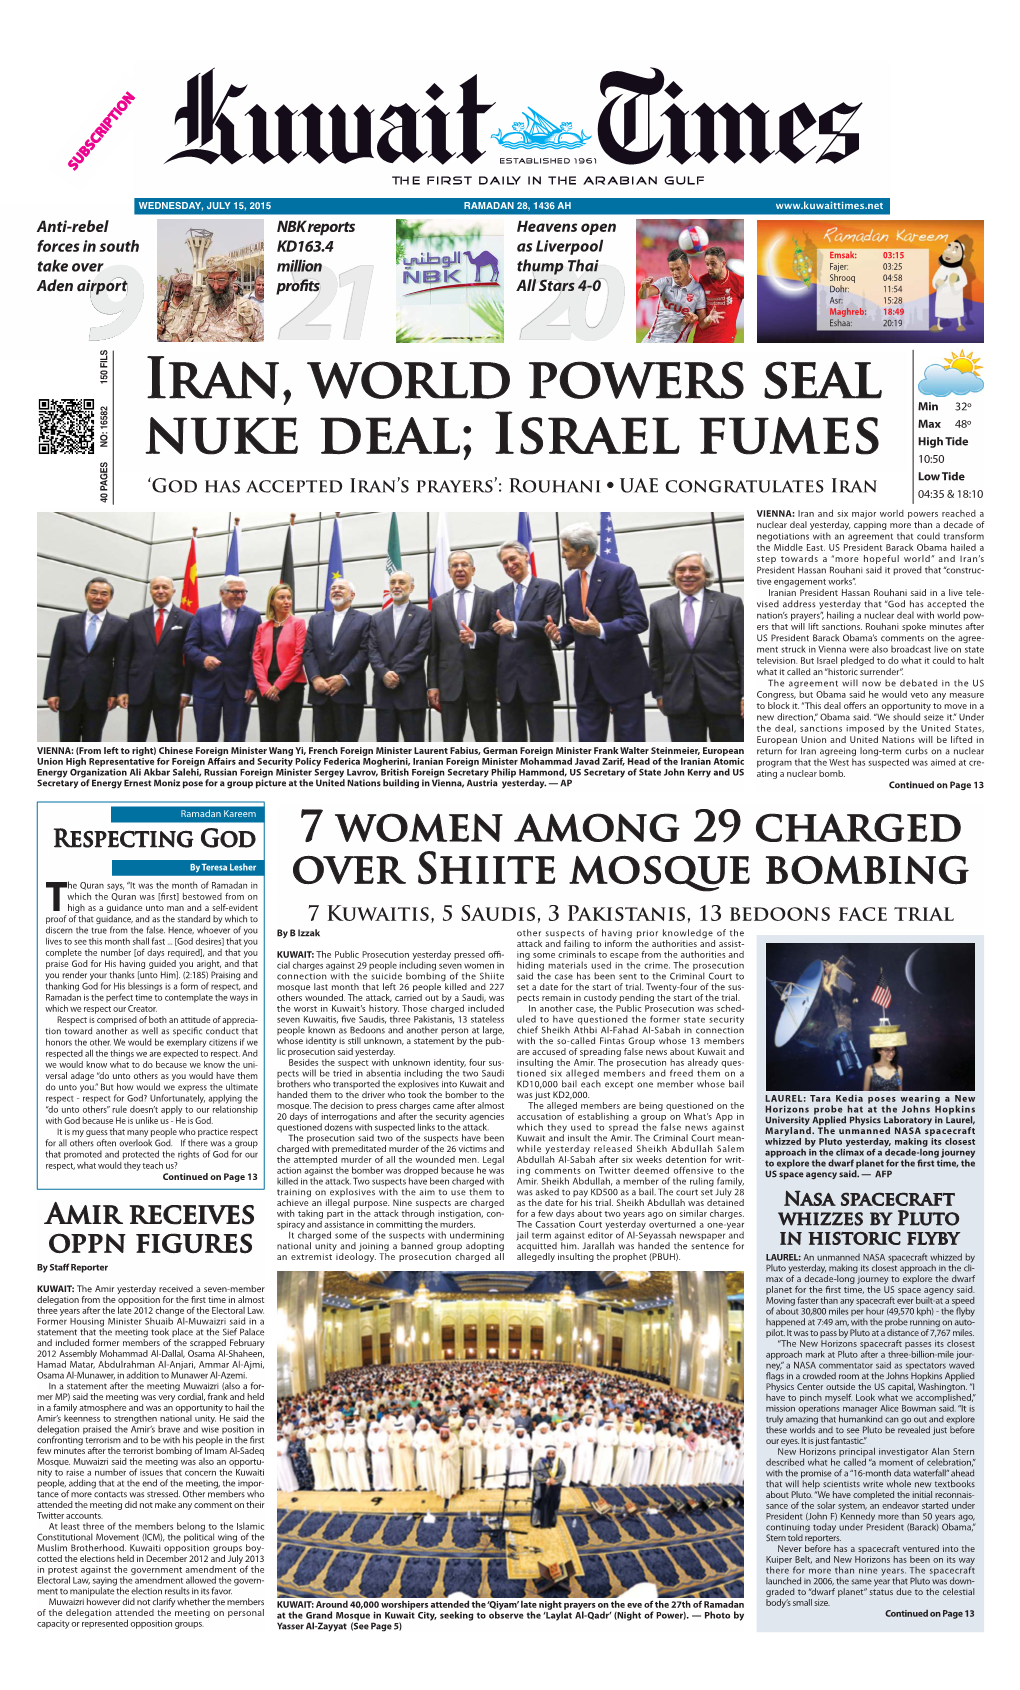 Iran, World Powers Seal Nuke Deal; Israel Fumes